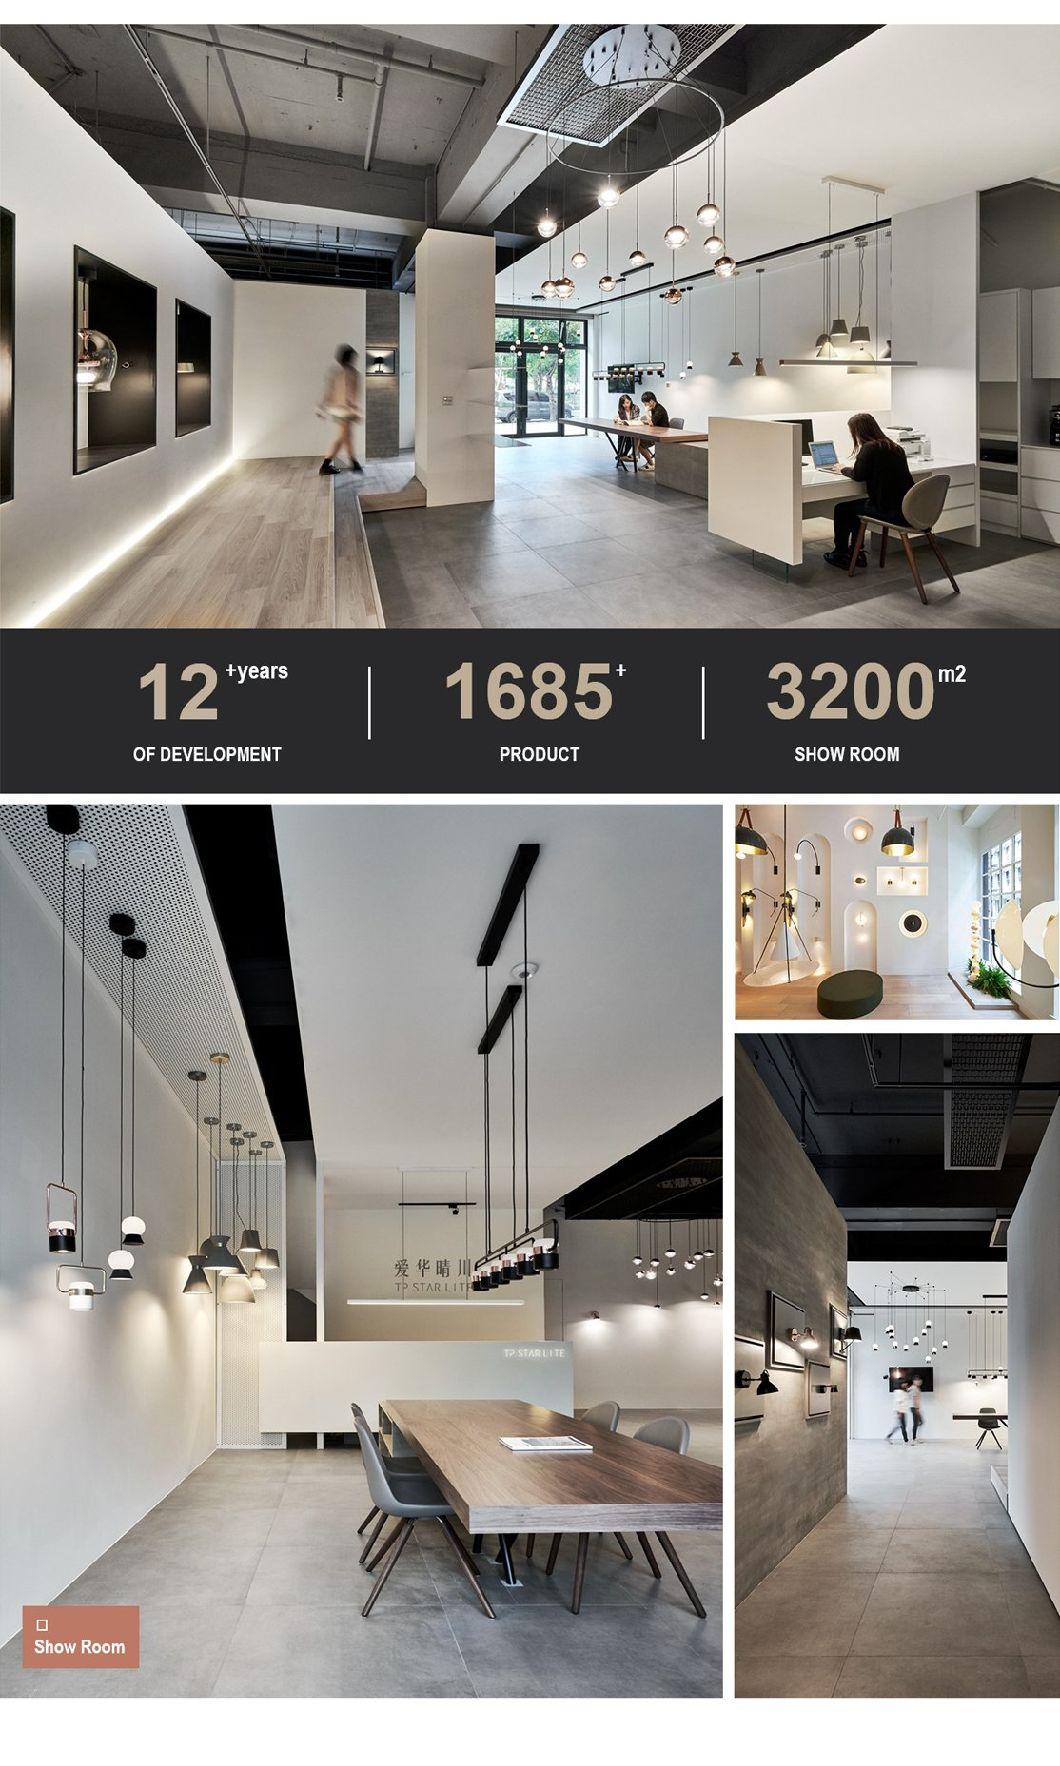 New Design Living Roommodern & Chandeliers Pendant Lamp